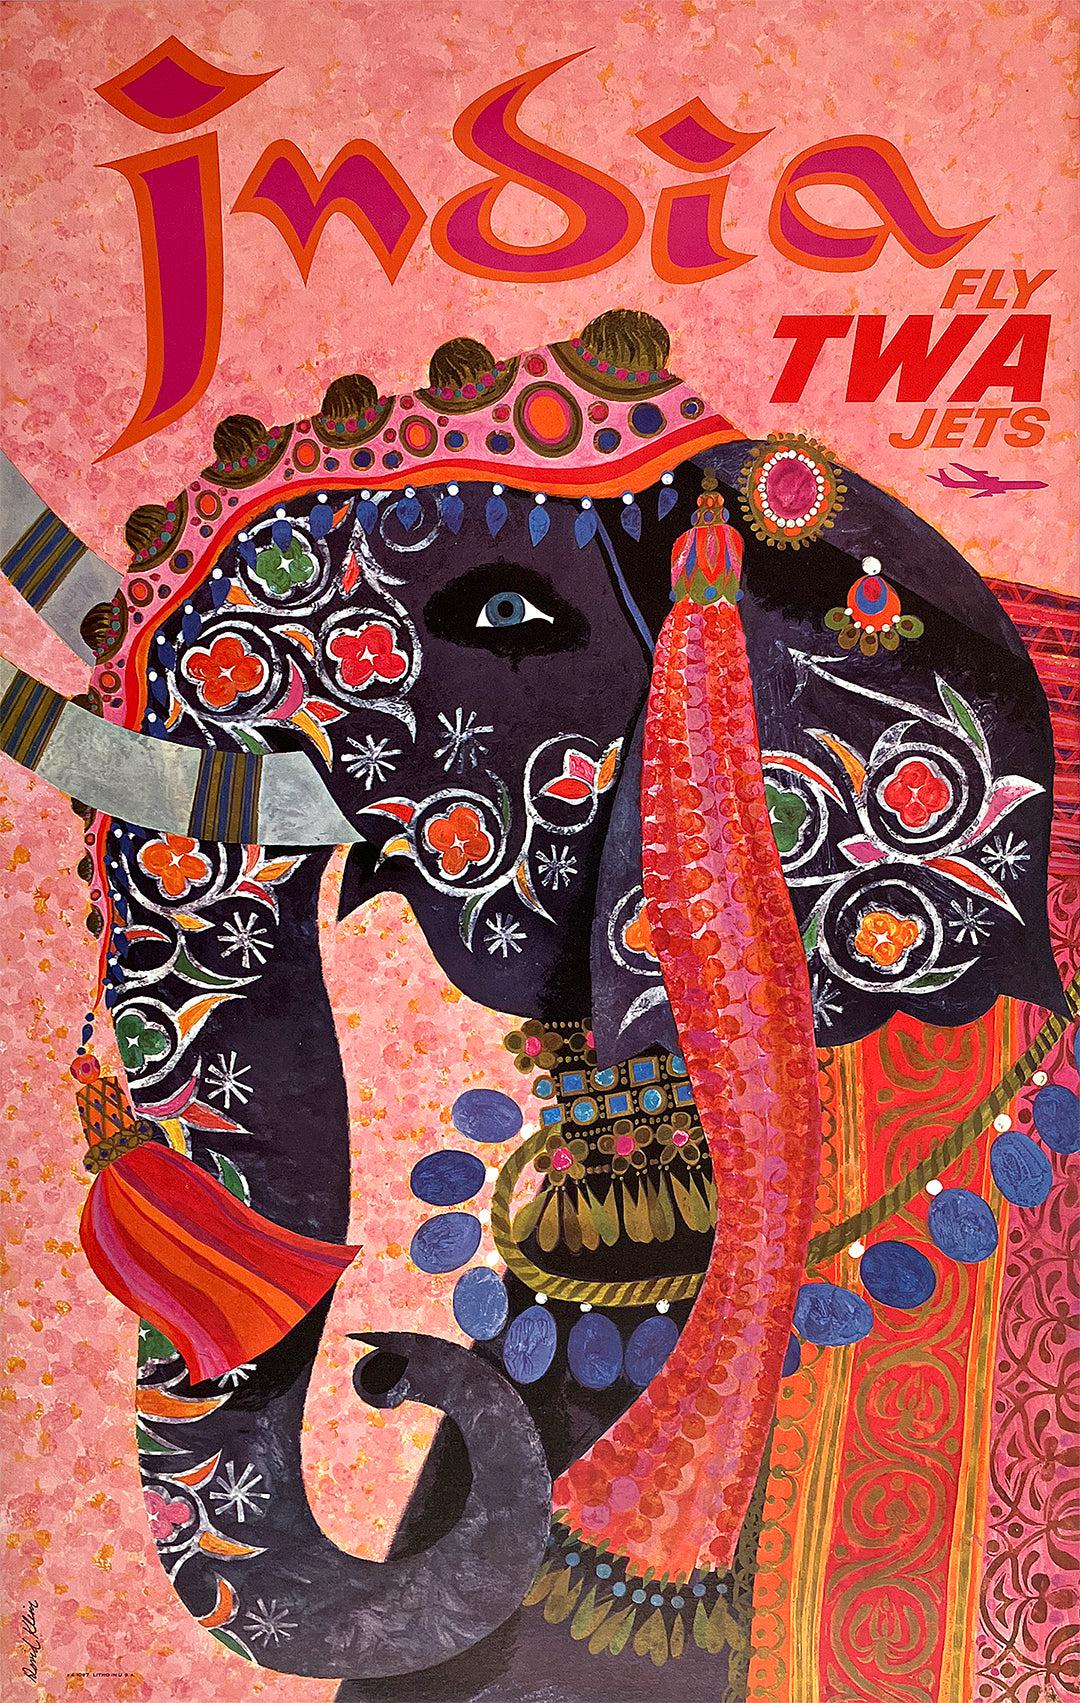 Original Vintage Fly TWA Jets India Pink Elephant Poster by David Klein c1960